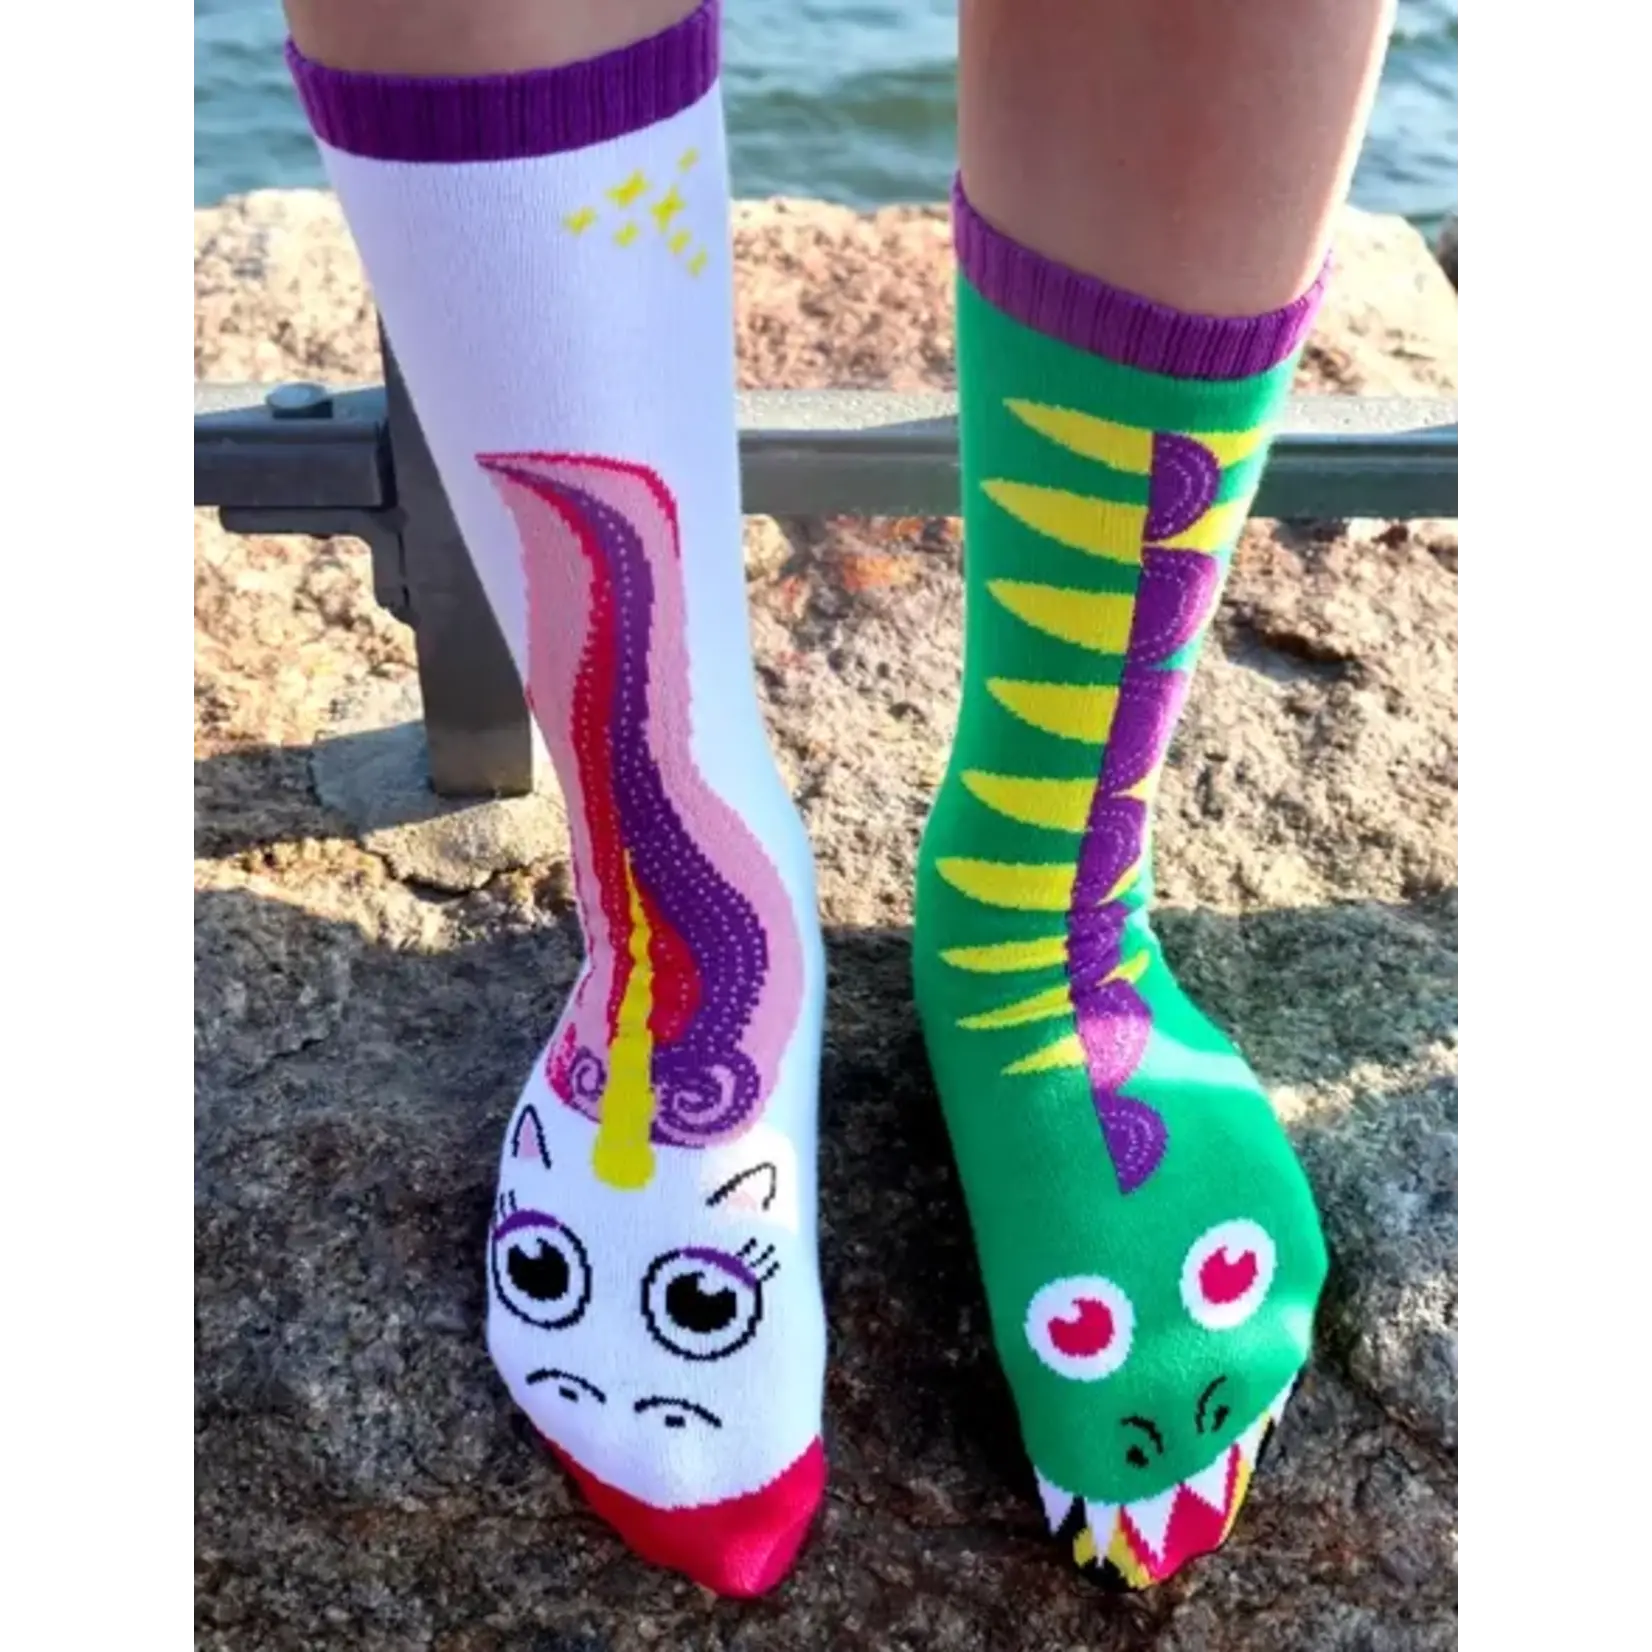 Pals Socks - Dragon & Unicorn Socks, Adult 13+